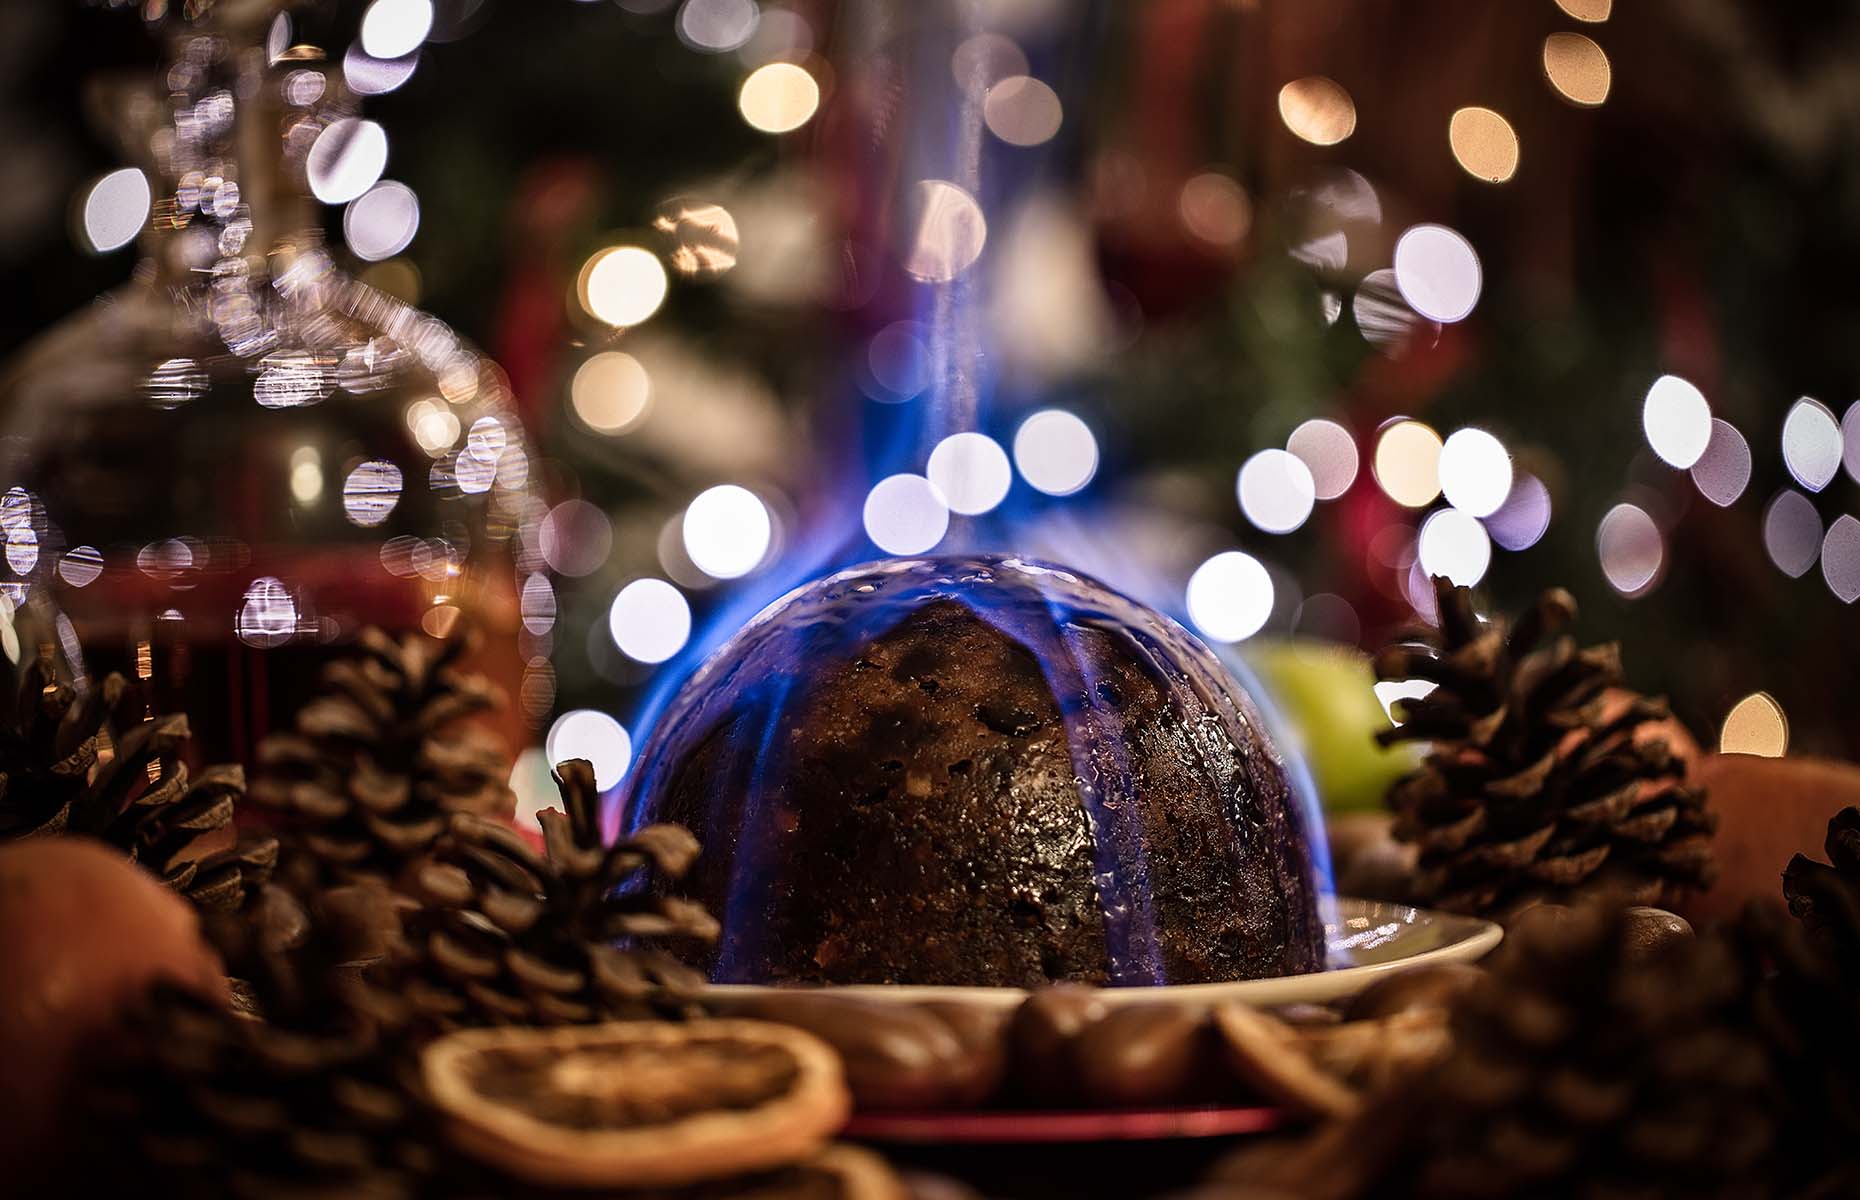 Christmas pudding on fire (Image: Mark Lister/Shutterstock)